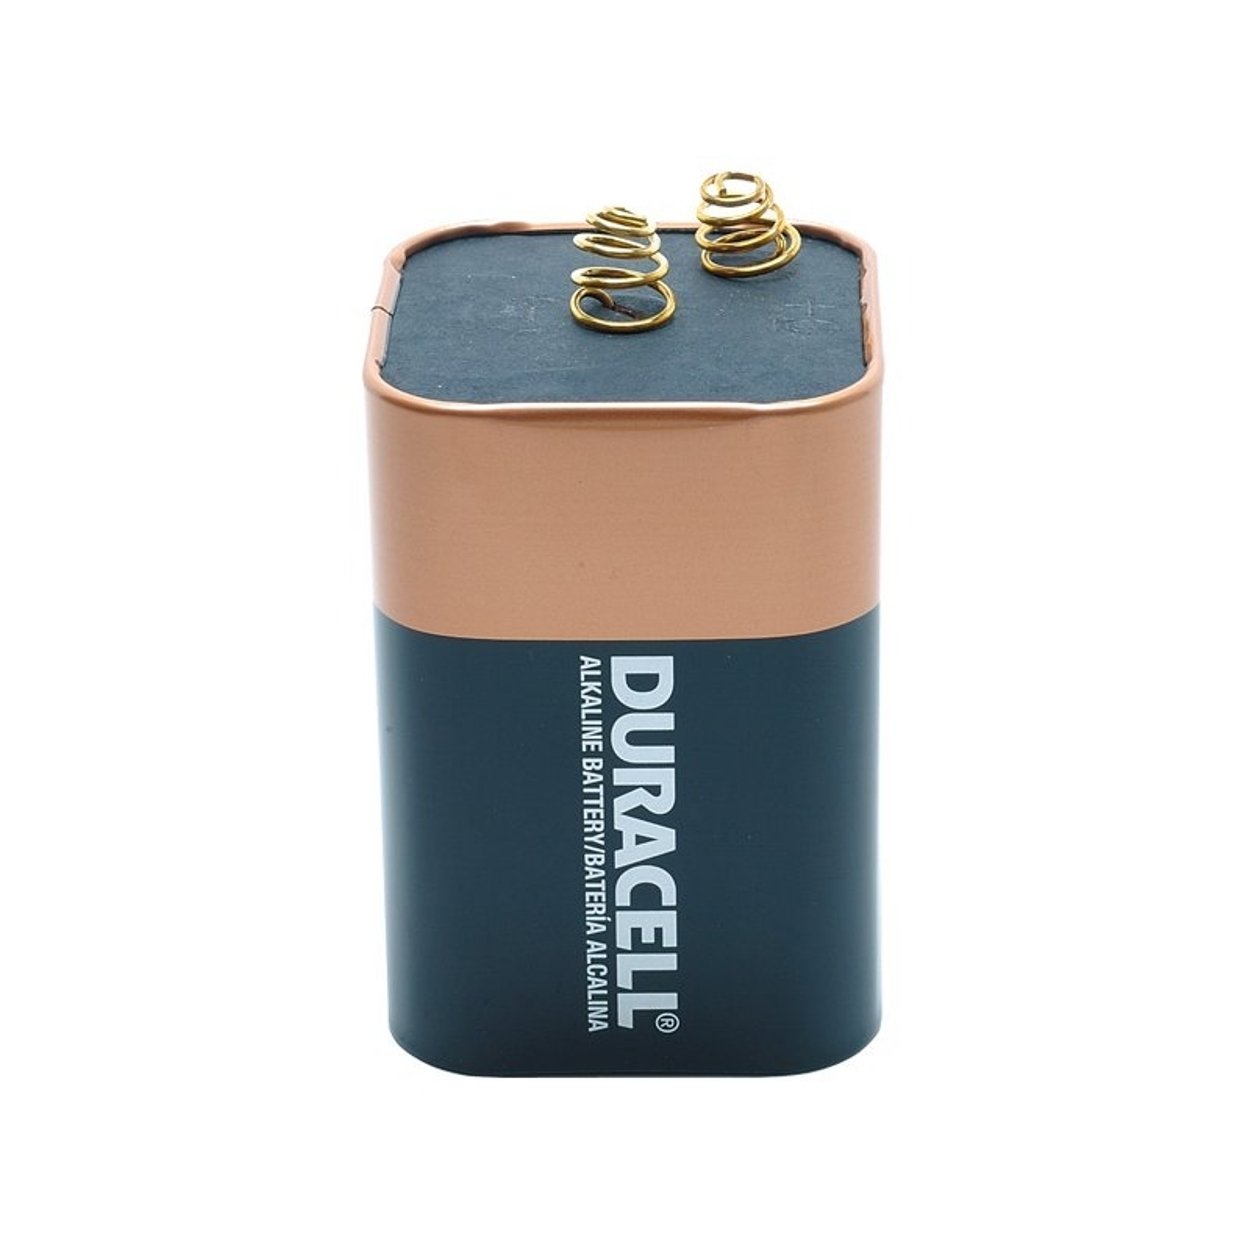 Gastvrijheid gids Polijsten Blokbatterij Duracell 908 4R25 6V alkaline 13 Ah - Excellentwebshop